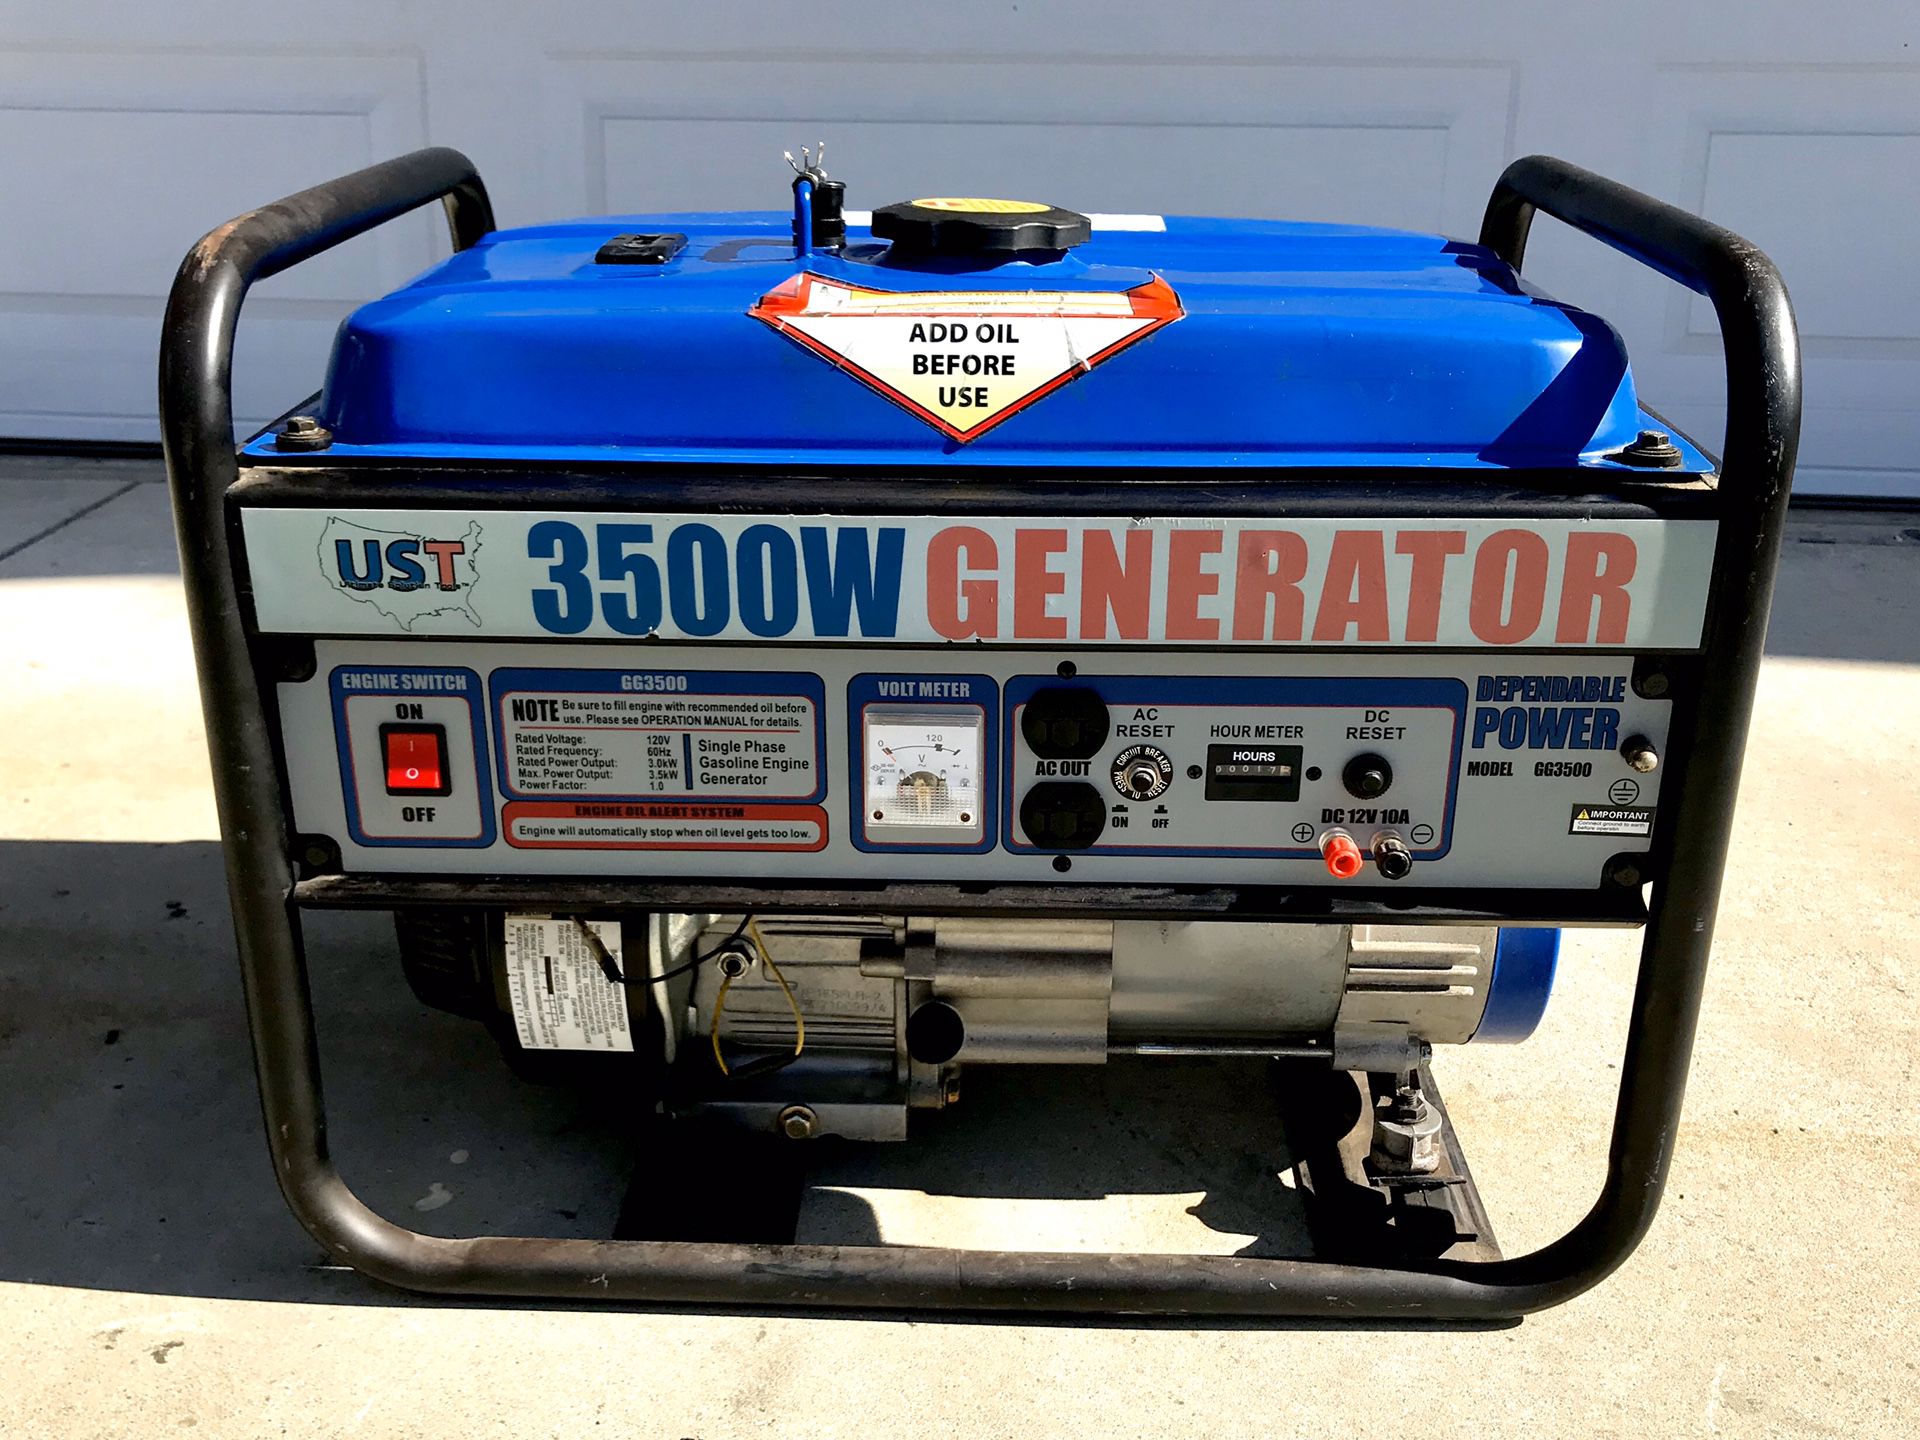 3500W Generator Like new